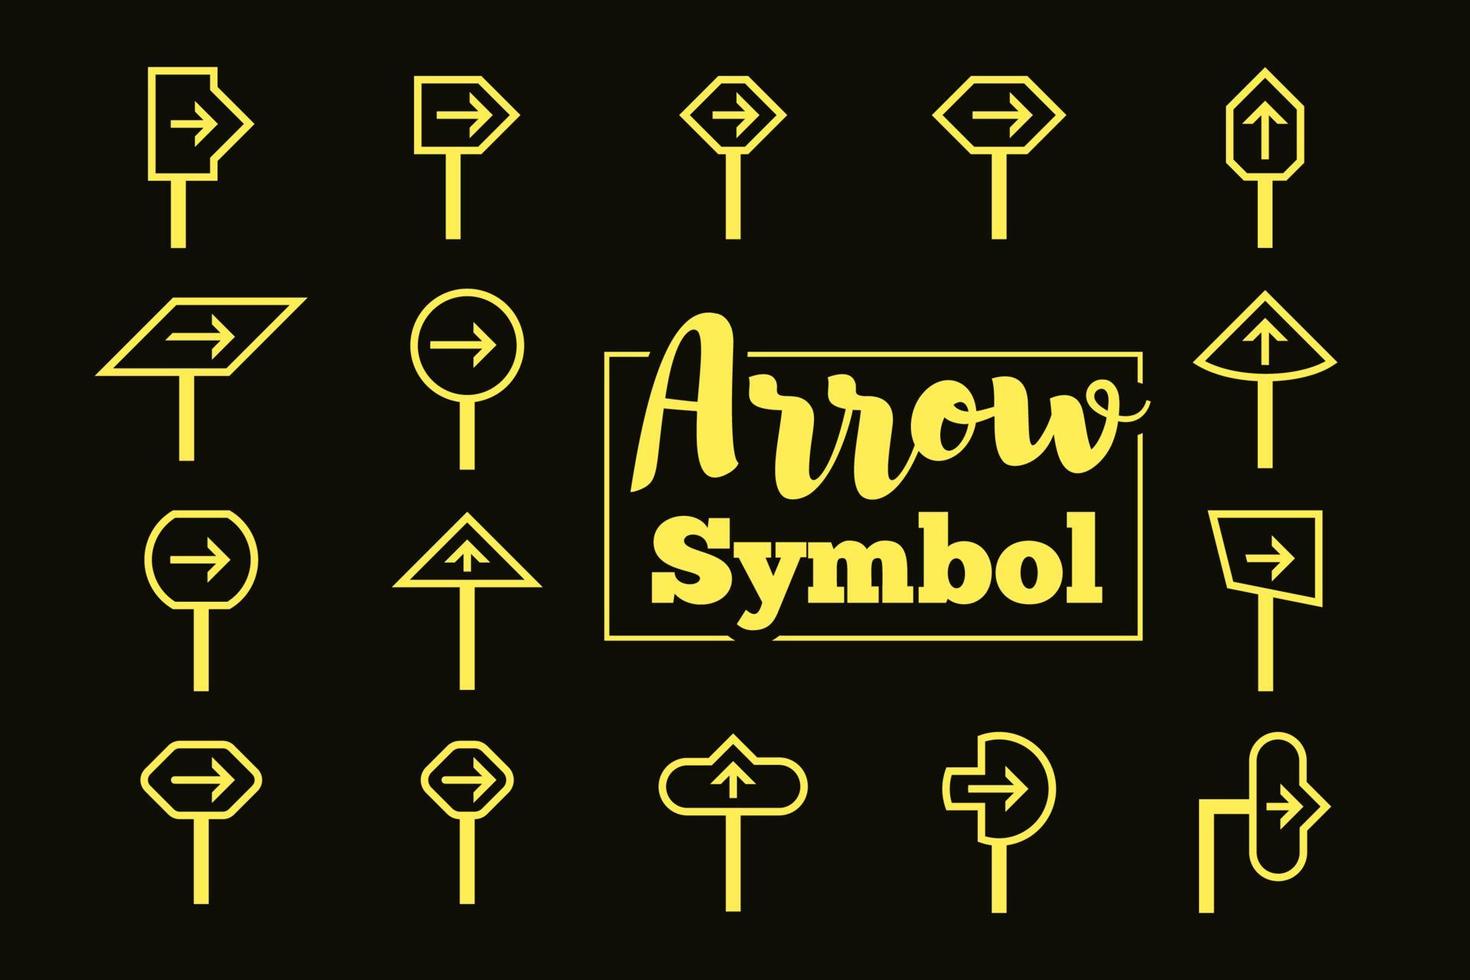 Arrow symbols on streets, malls, markets, parks. Vector road signs.